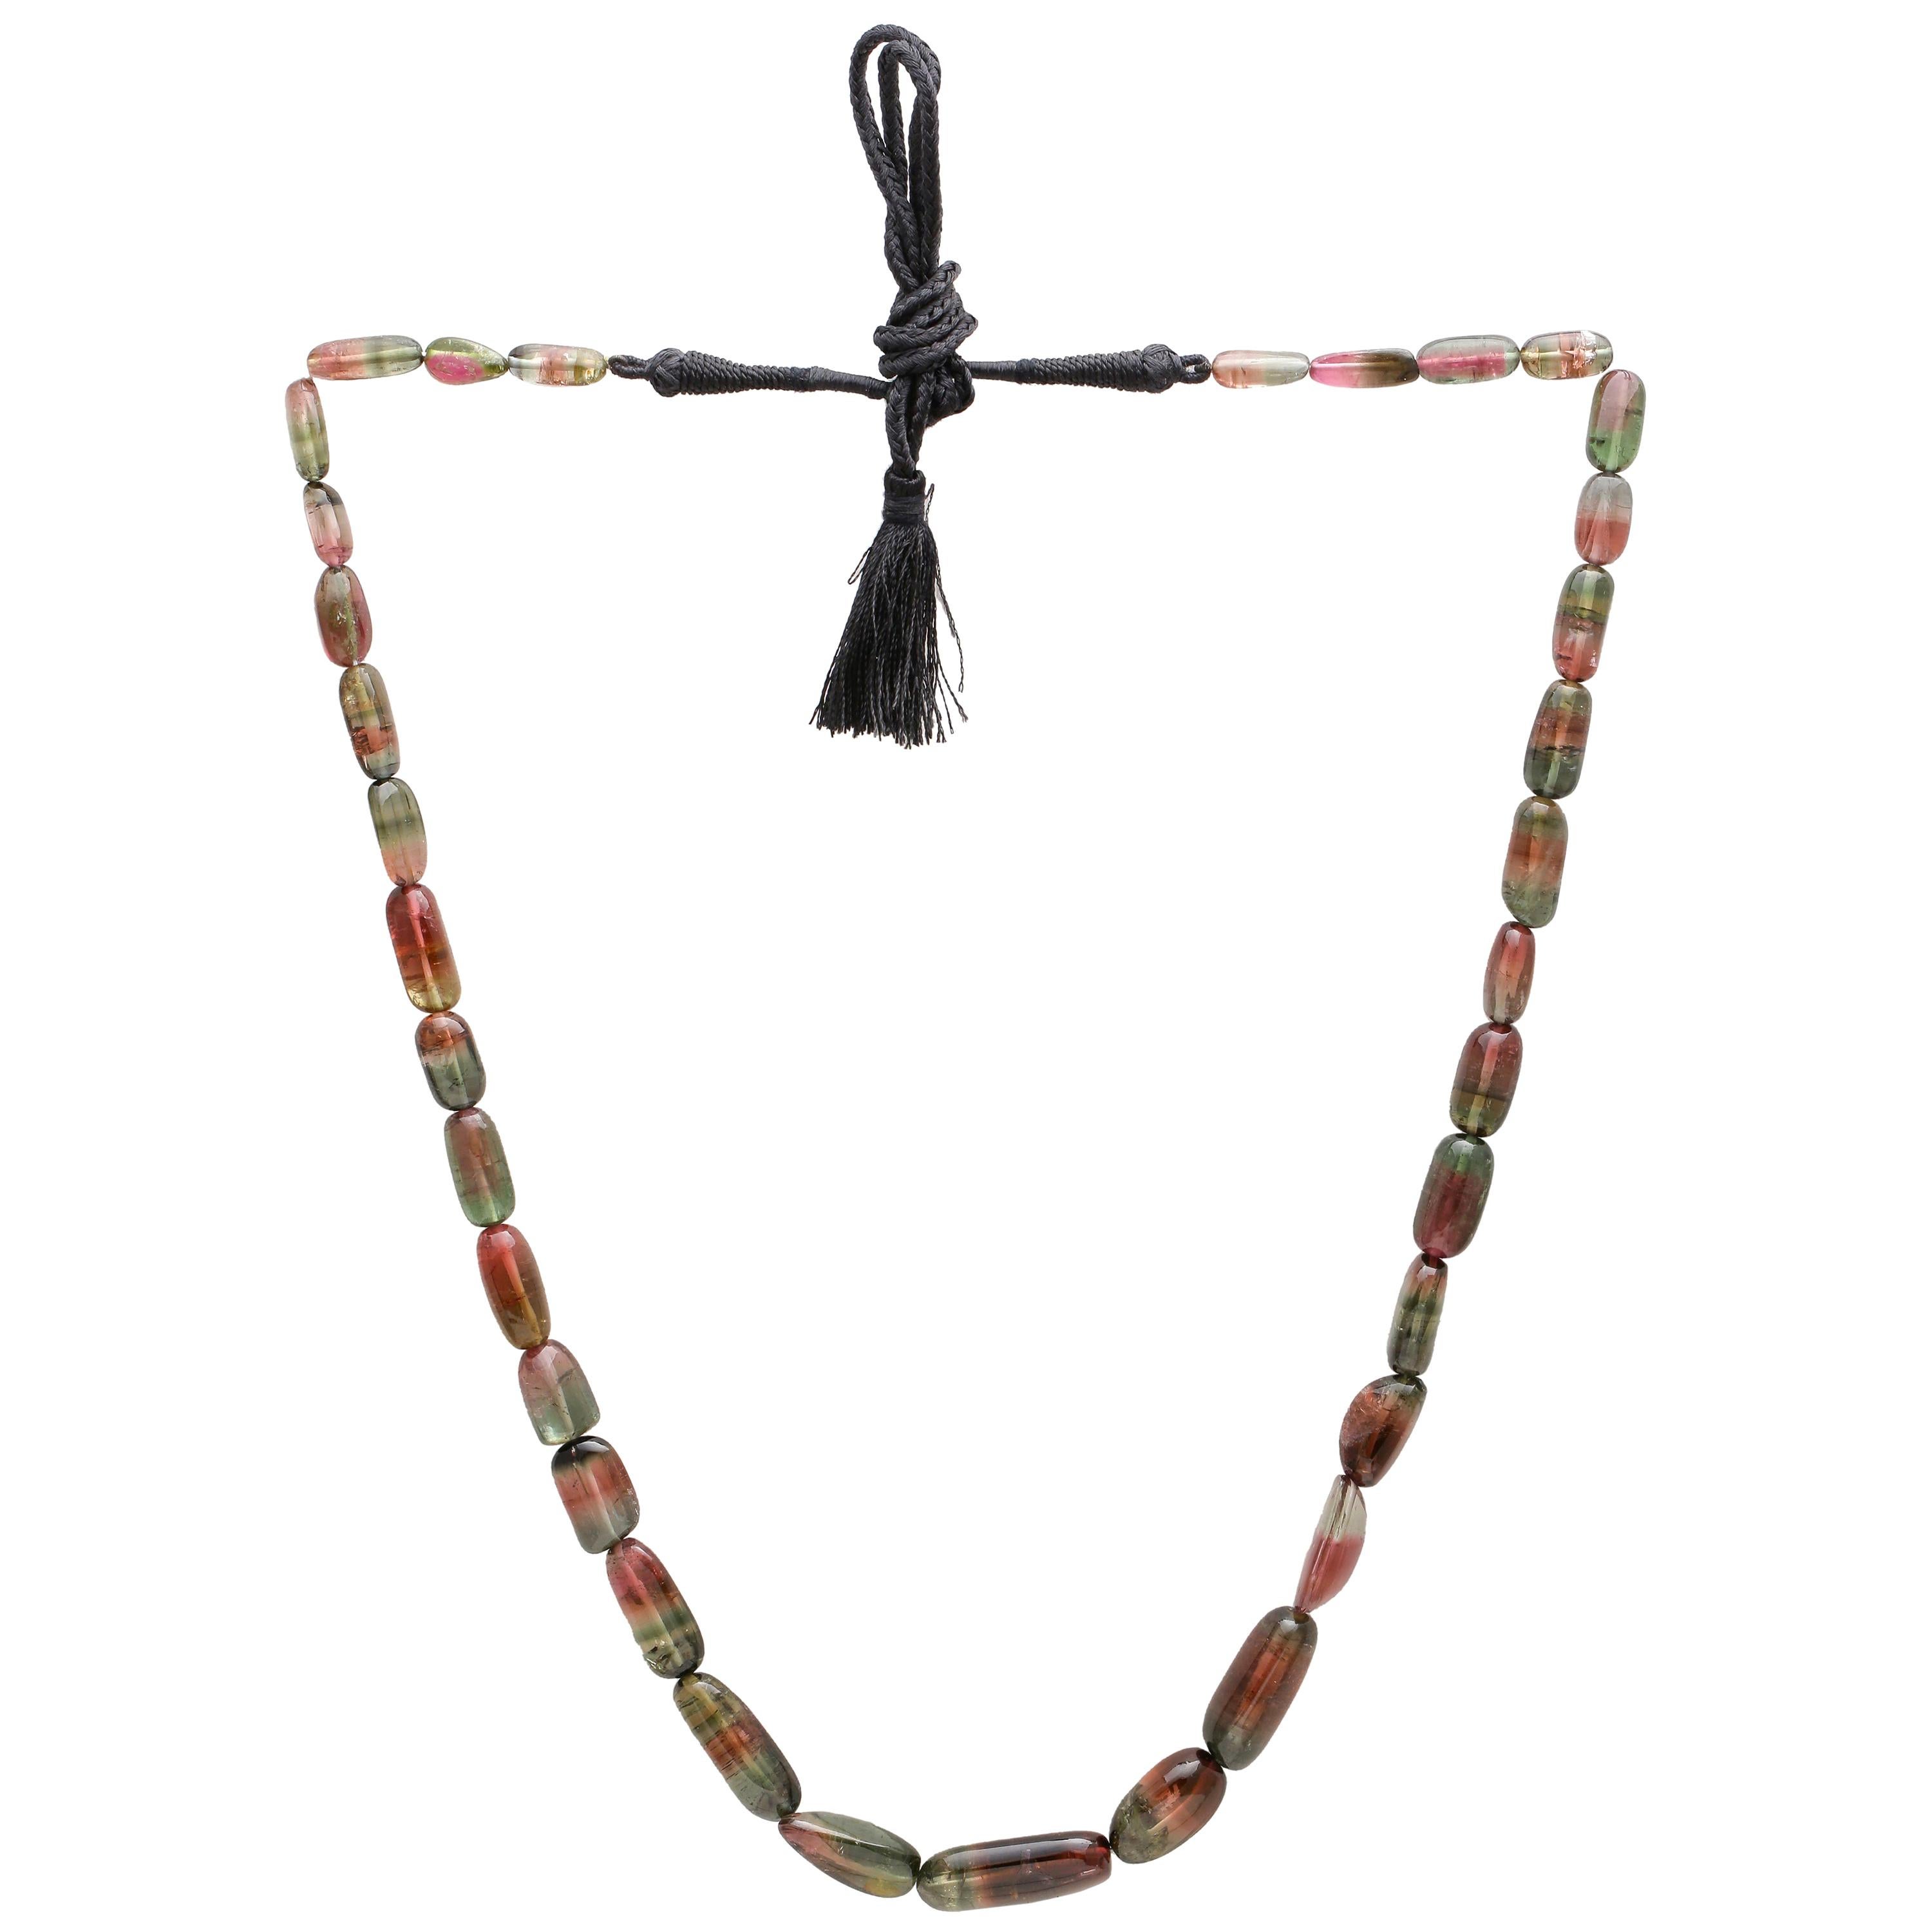 403 Carat Multi-Color Tourmaline Bead Necklace with Silk Thread For Sale